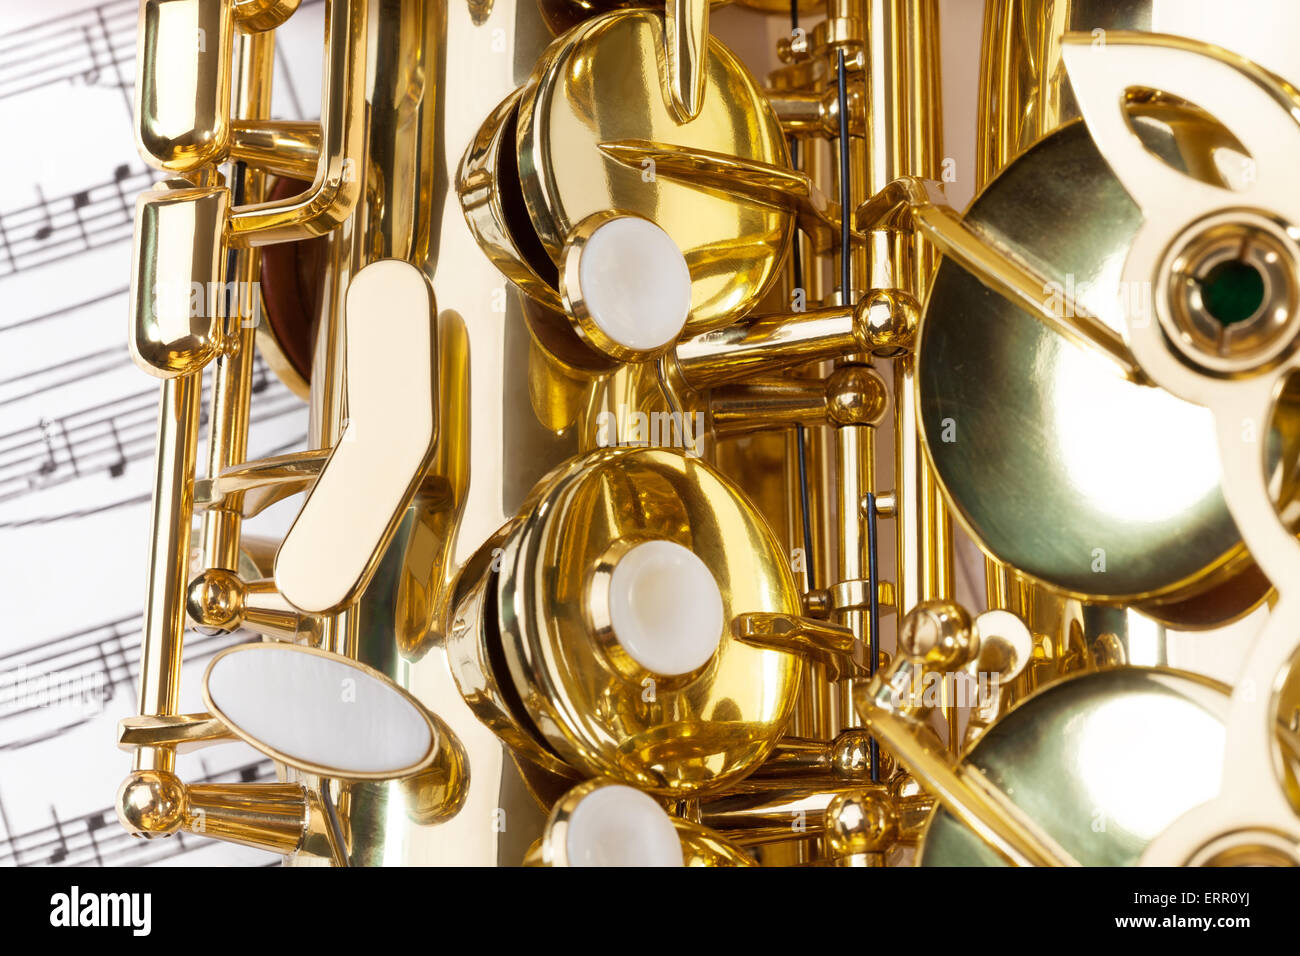 Close-up detailed view of alto saxophone keys Stock Photo